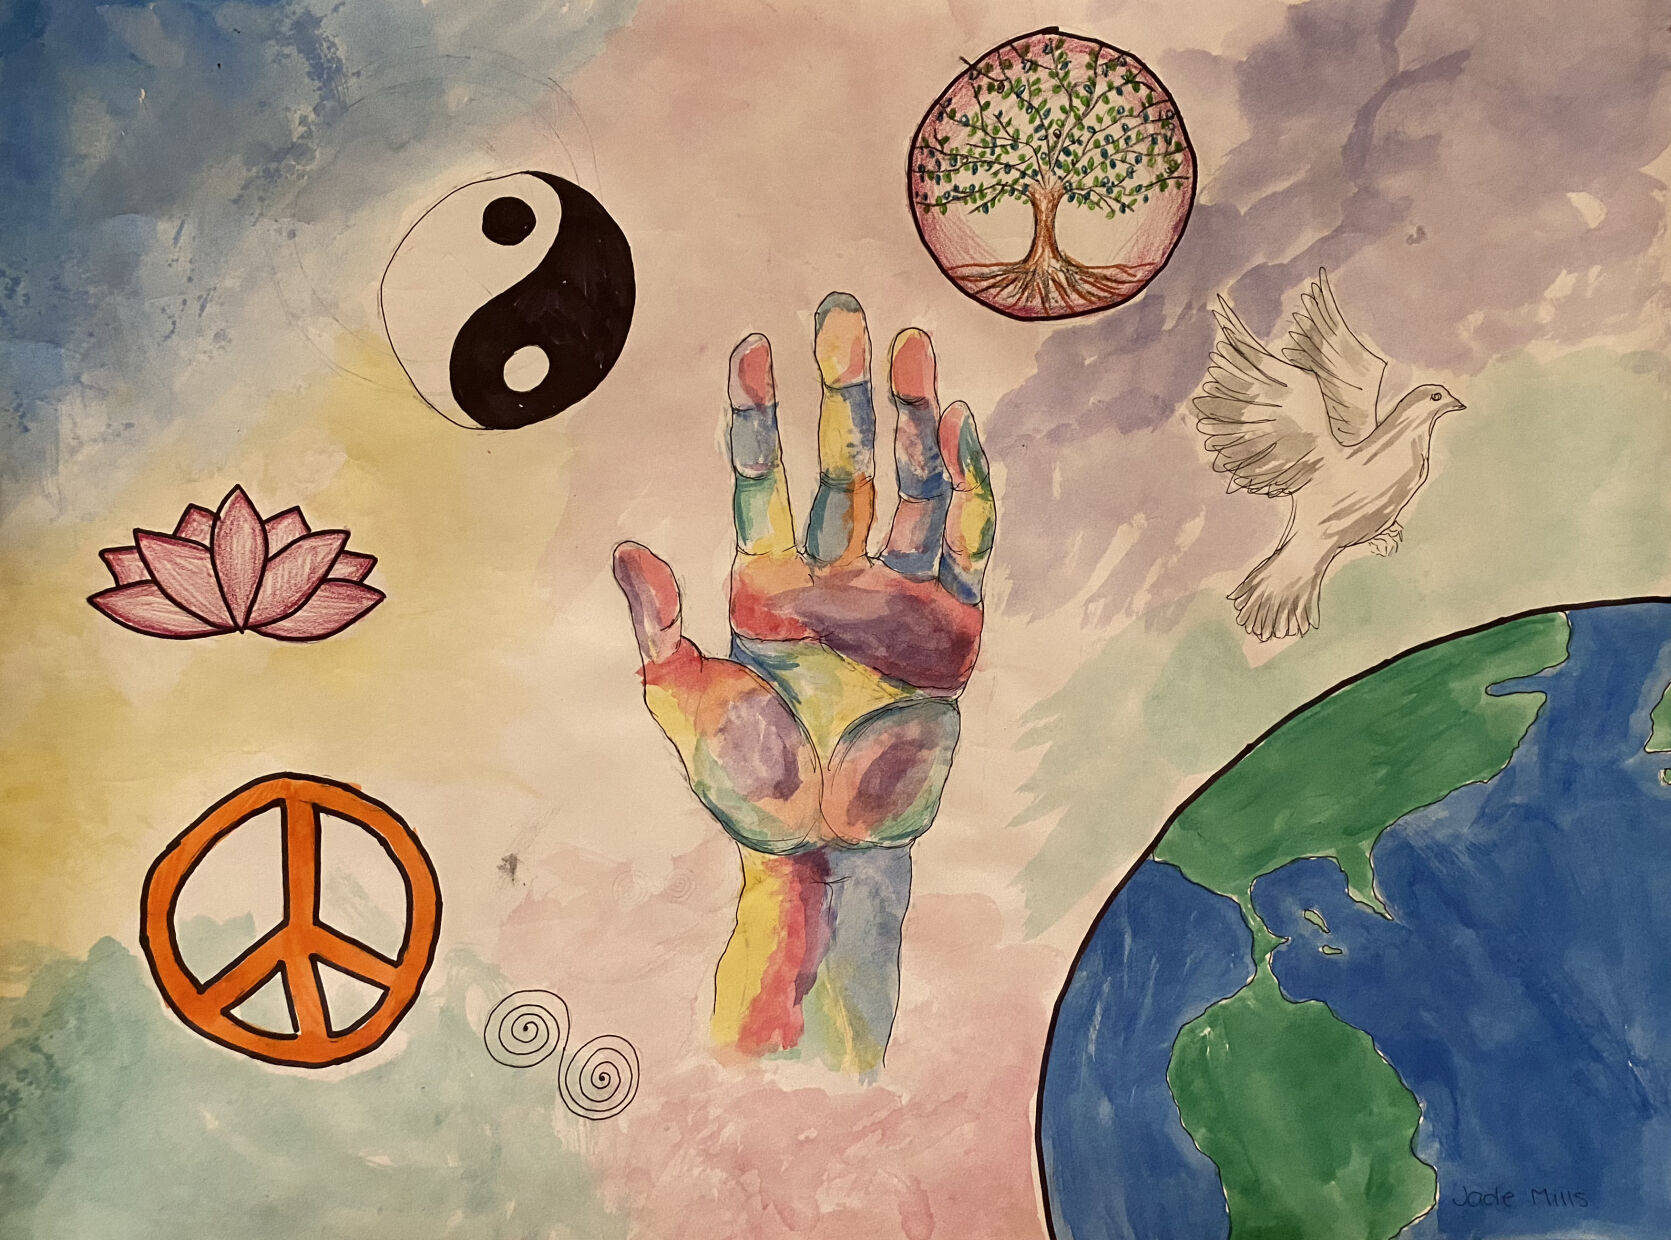 World peace, no war ☮️ #draweveryday #instaart #cuteart #イラスト #일러스트  #childrenillustration #popart #nowar #worldpeace | Instagram